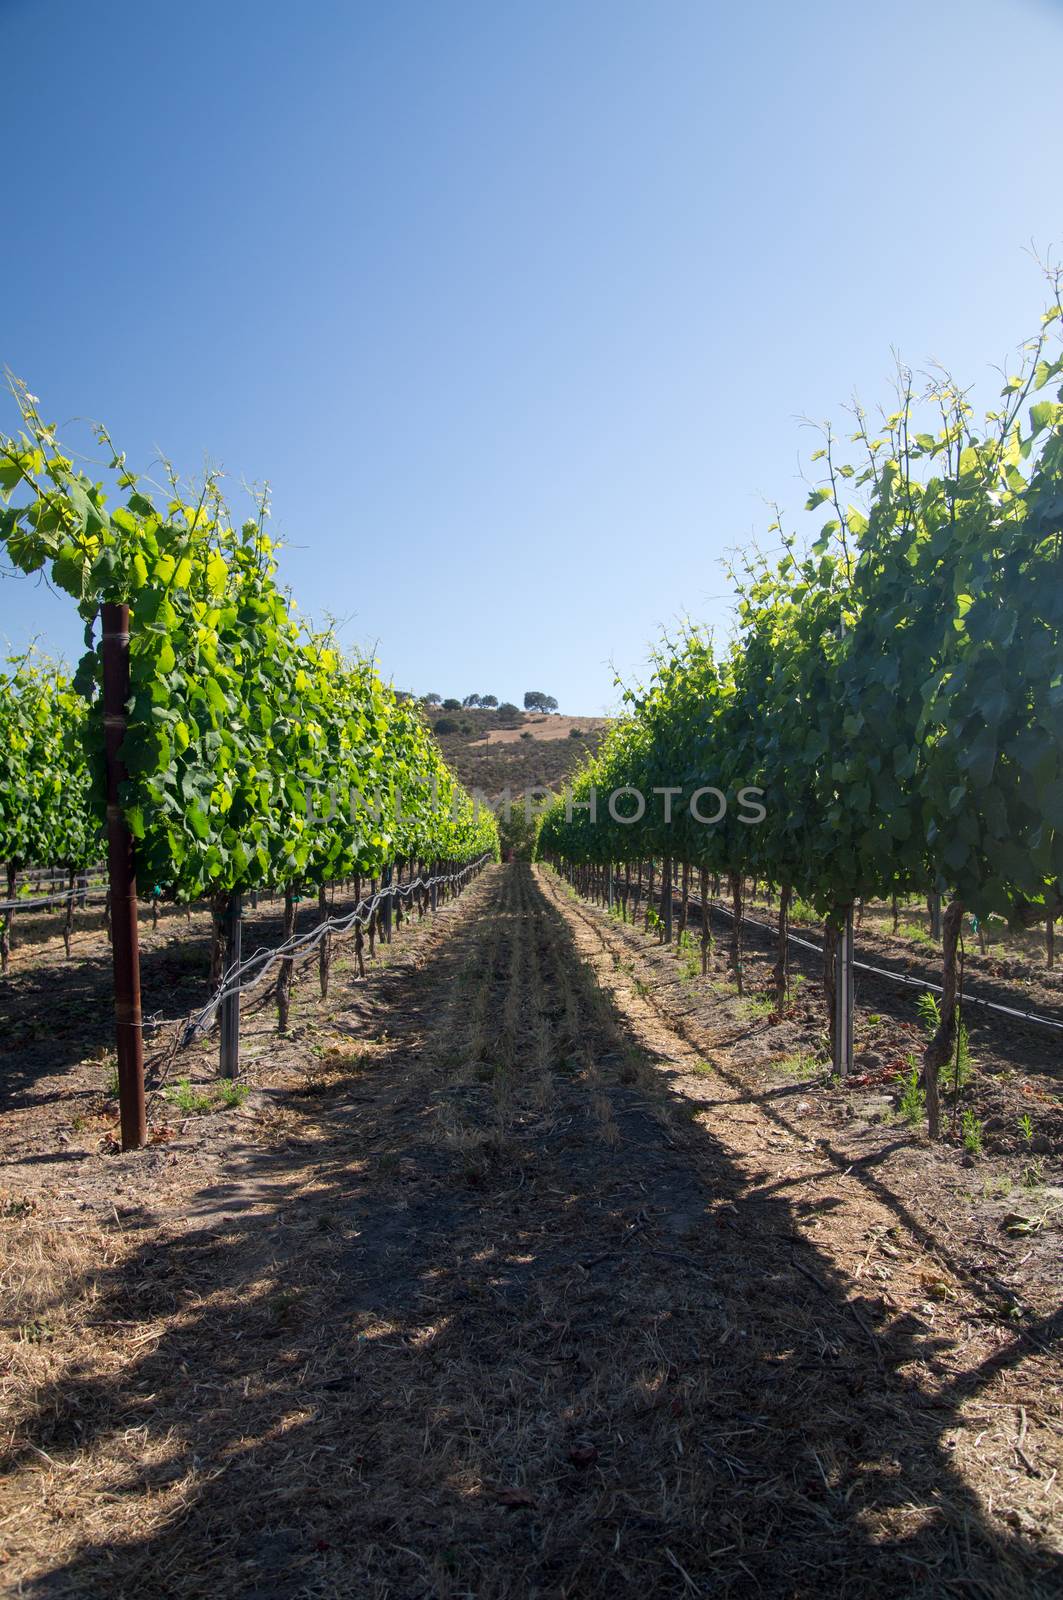 California grapevines in Summer